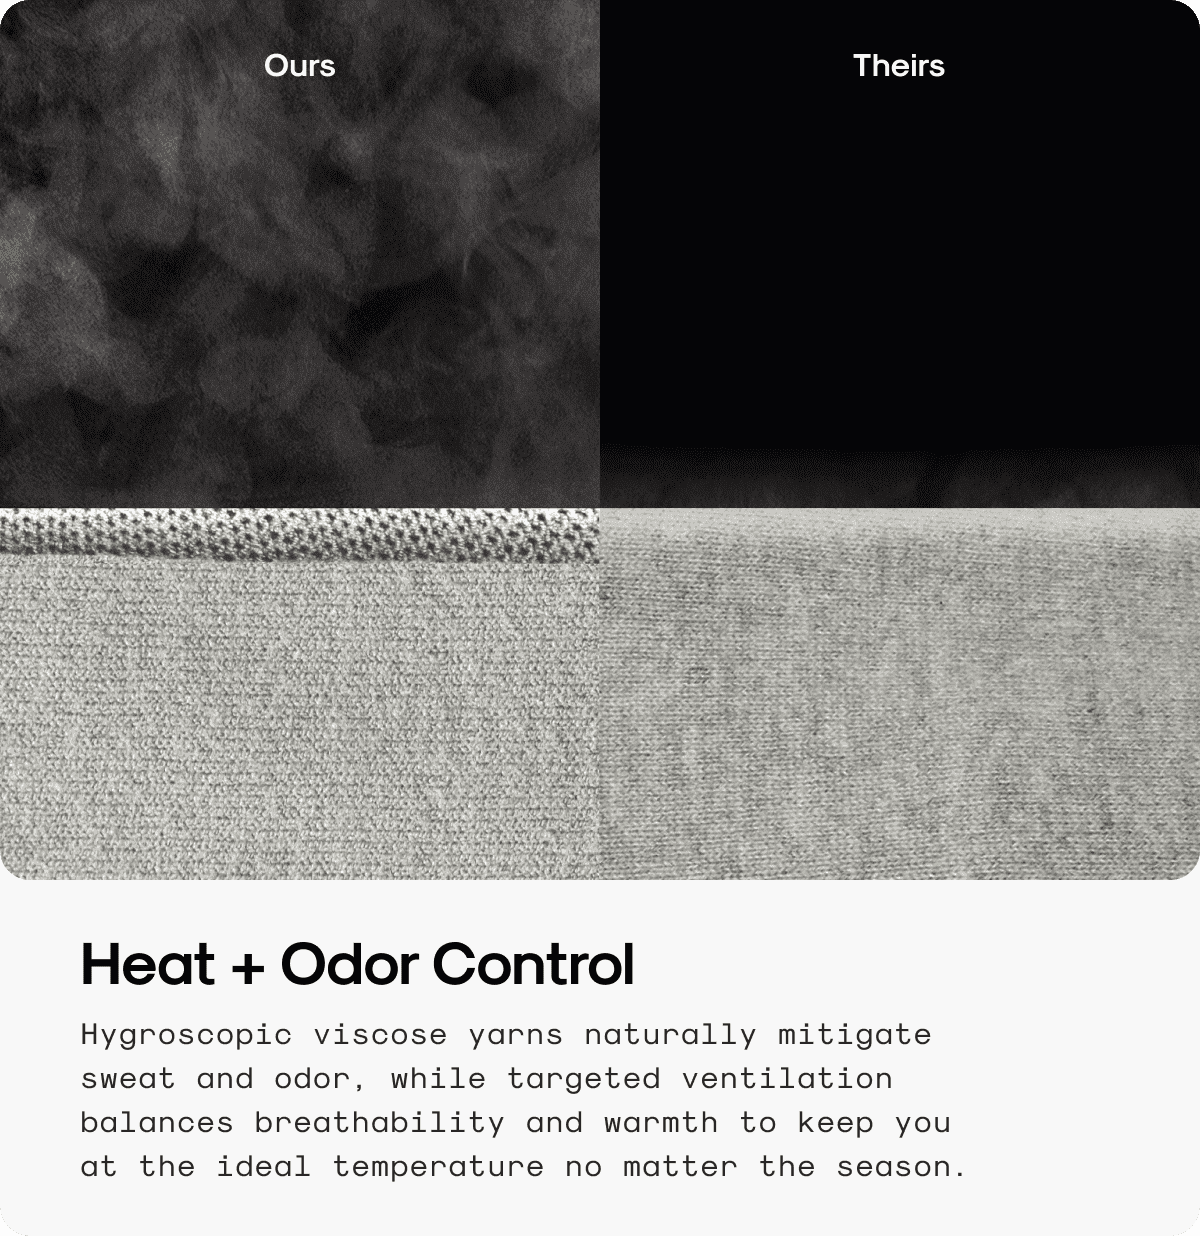 Heat + Odor Control